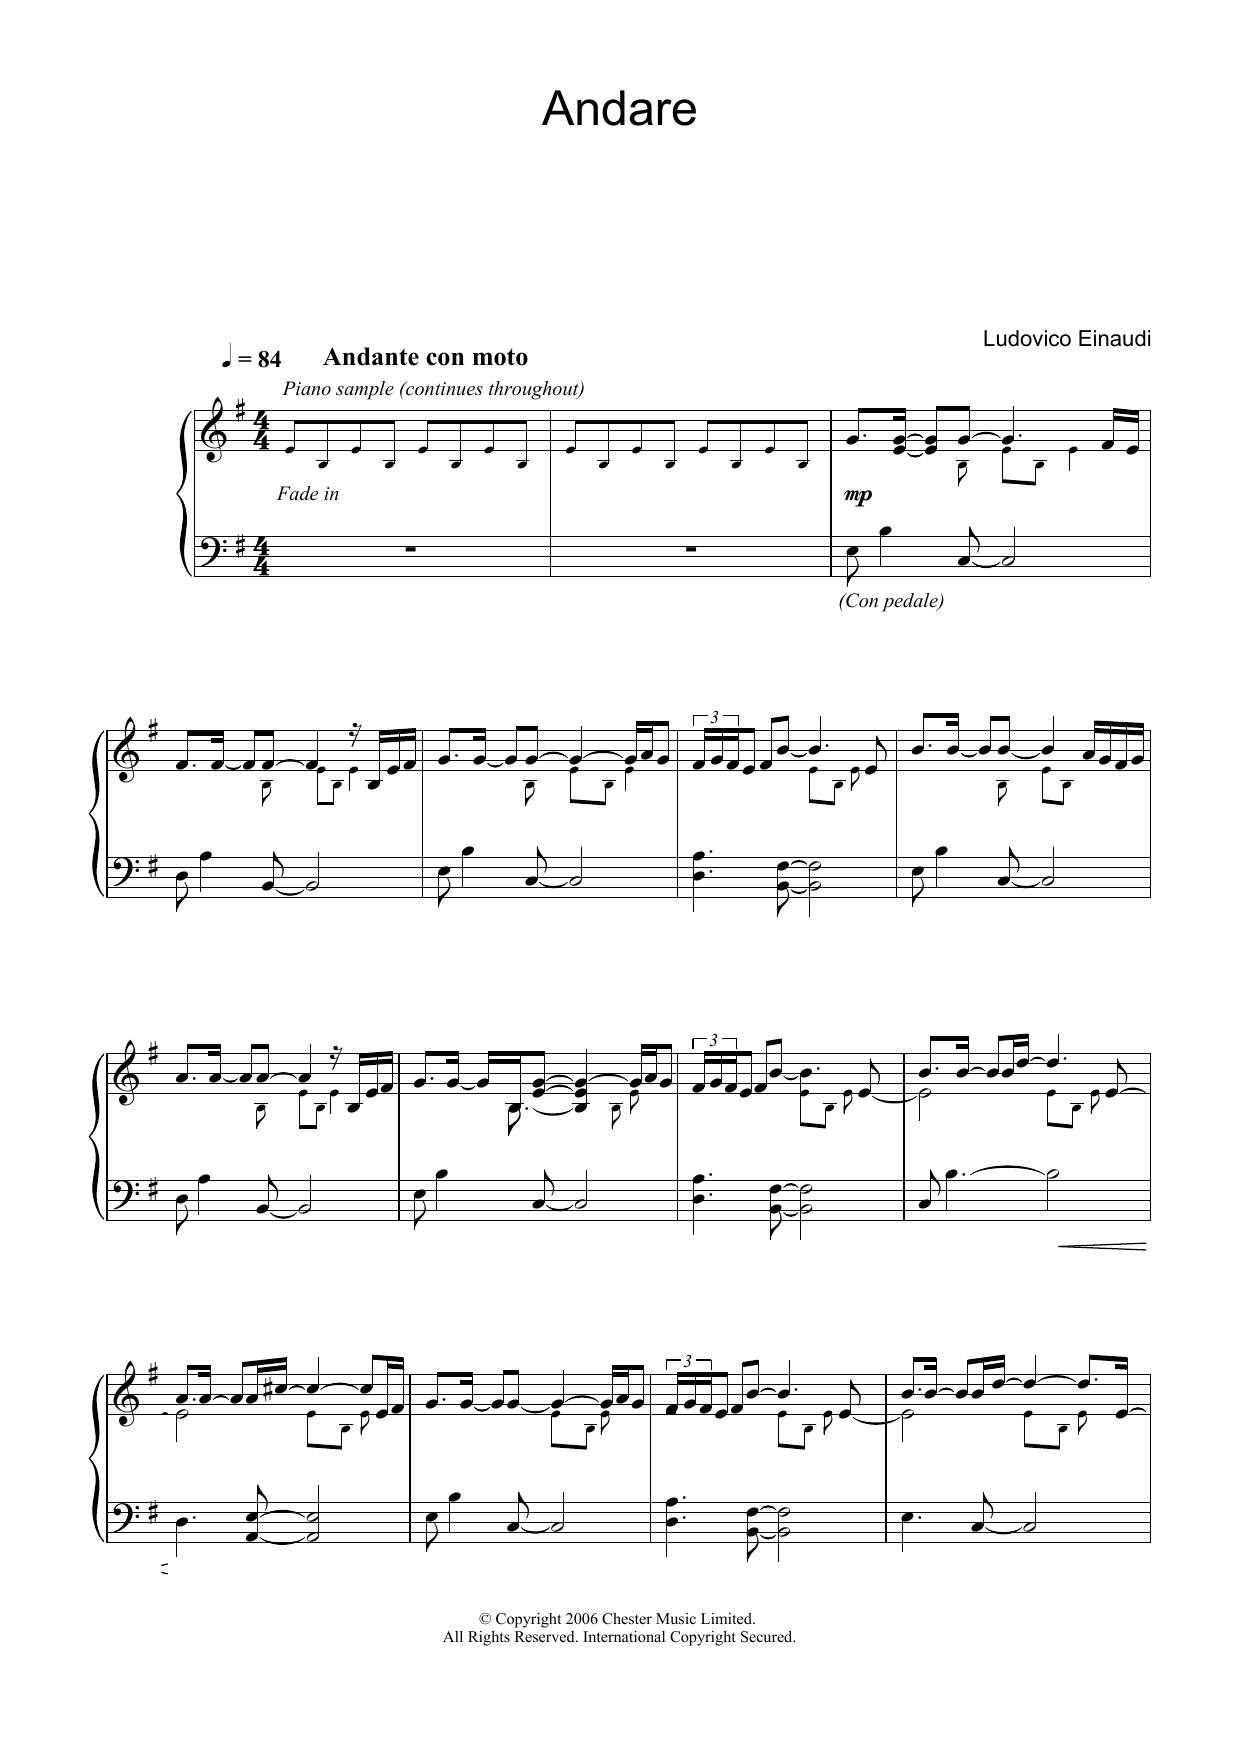 Download Ludovico Einaudi Andare Sheet Music